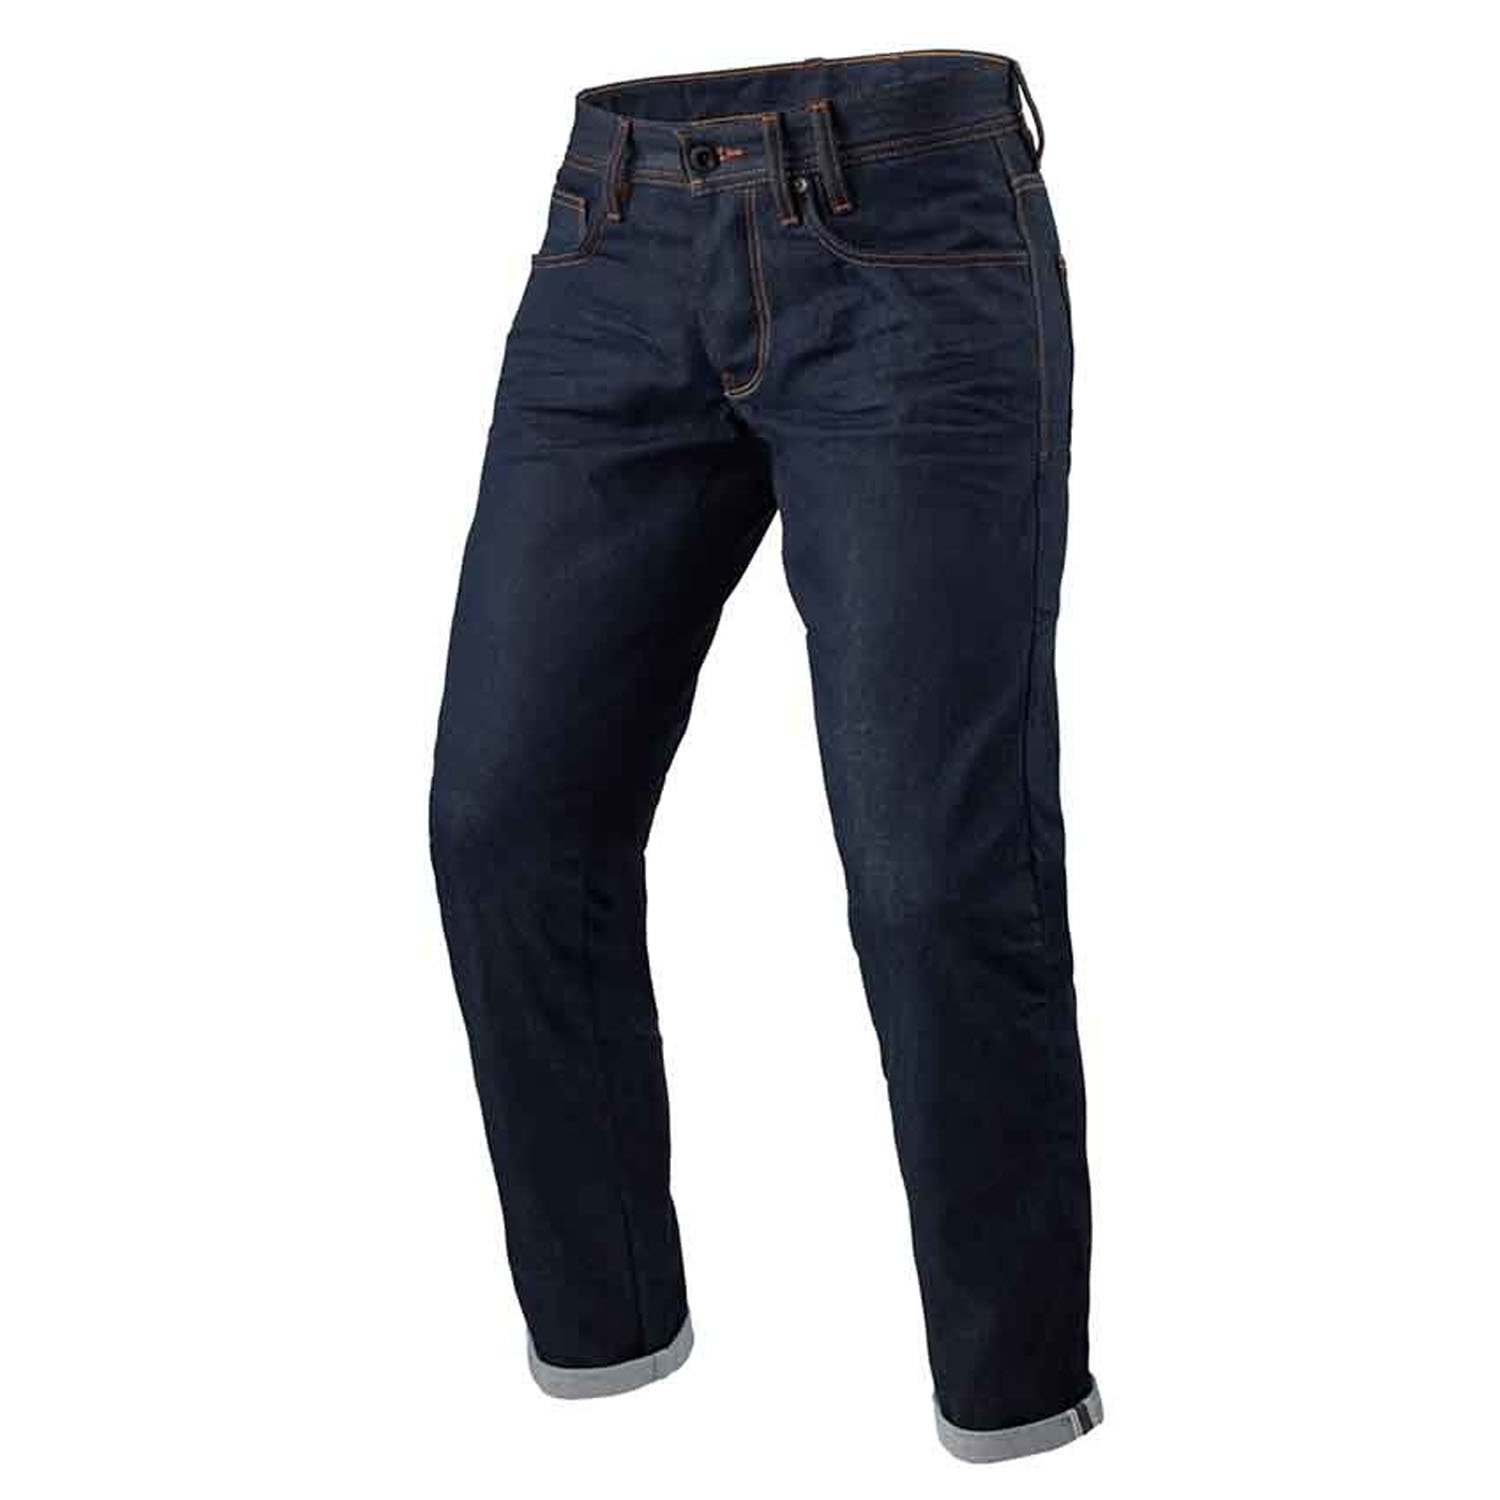 Image of REV'IT! Jeans Lewis Selvedge TF Dark Blue L36 Motorcycle Pants Size L36/W33 EN